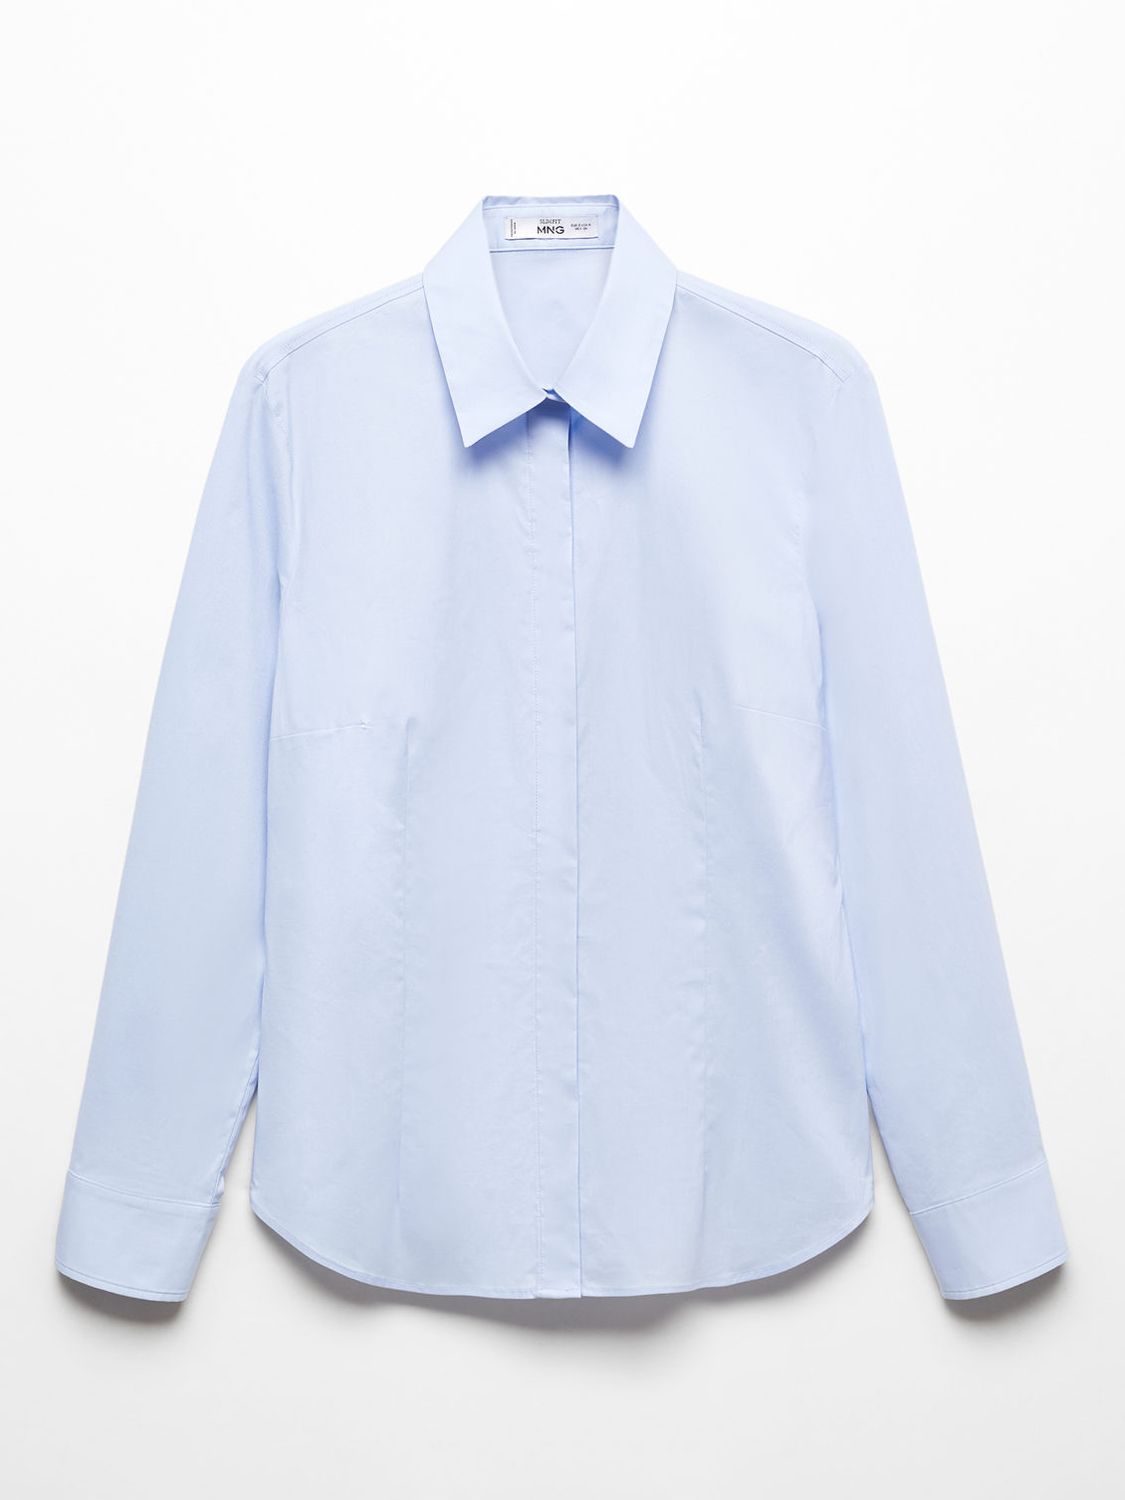 Mango Sofia Essential Long Sleeve Shirt, Pastel Blue at John Lewis ...